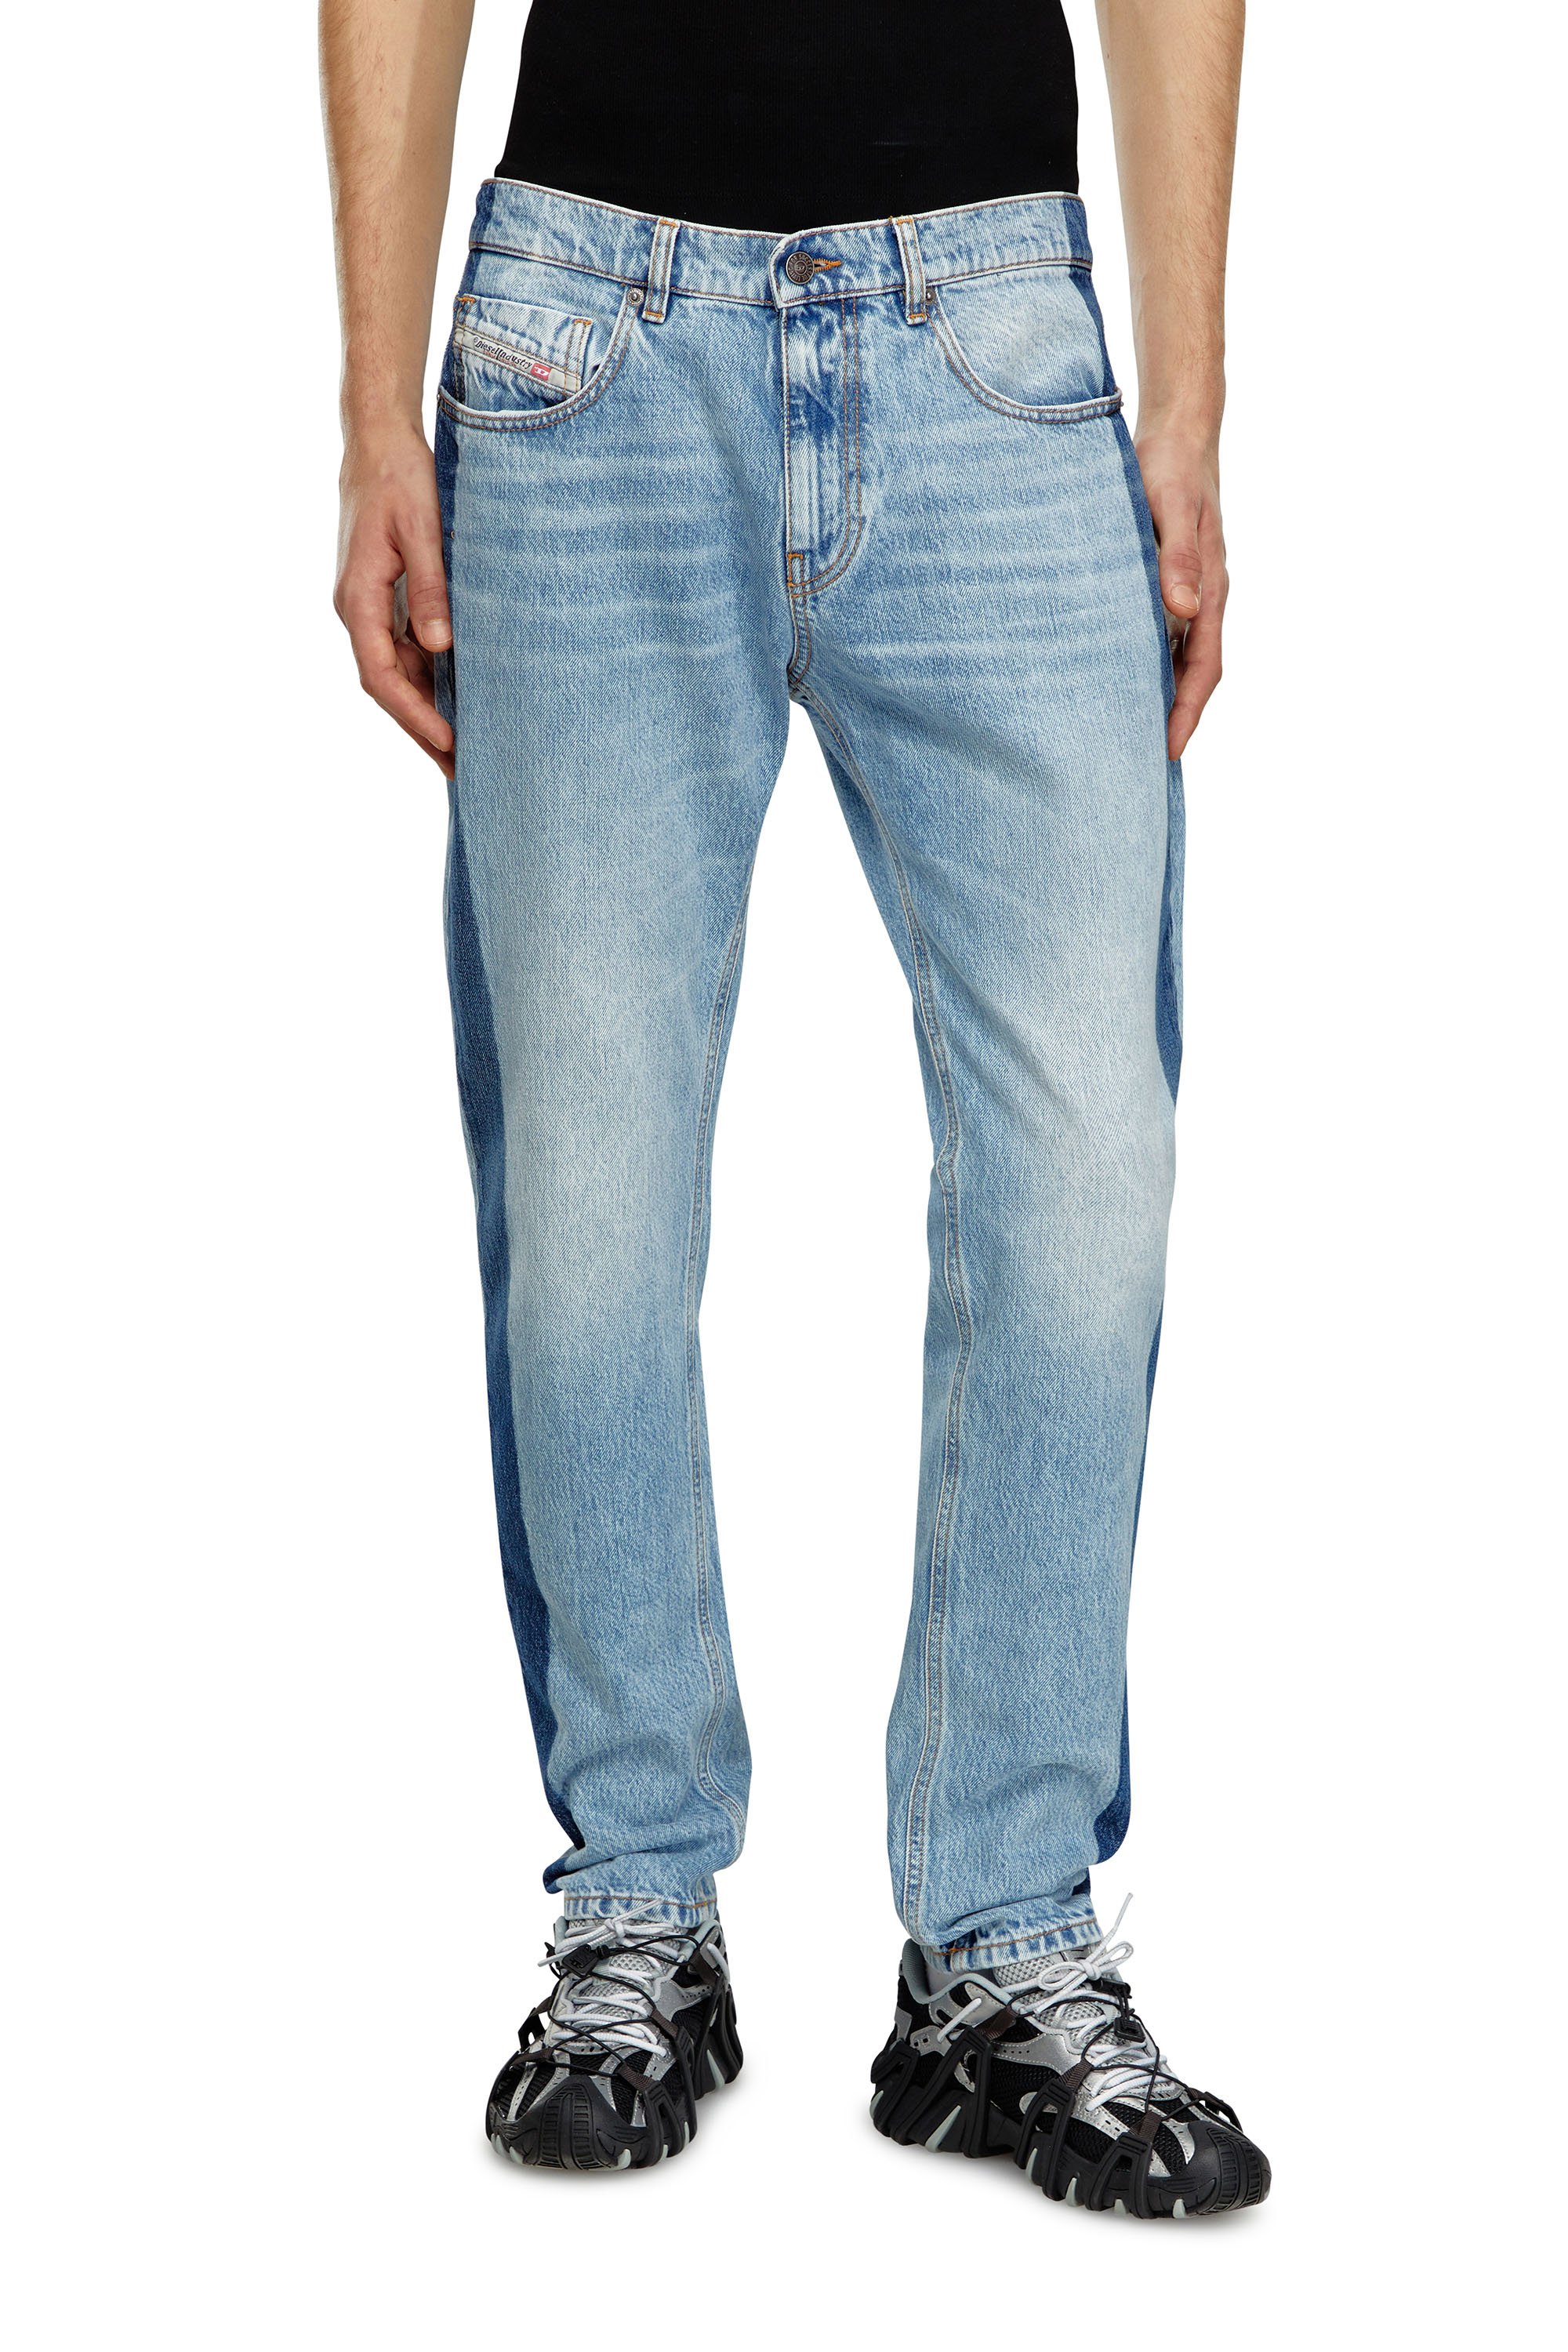 Diesel - Slim Jeans 2019 D-Strukt 0GHAC, Hombre Slim Jeans - 2019 D-Strukt in Azul marino - Image 2